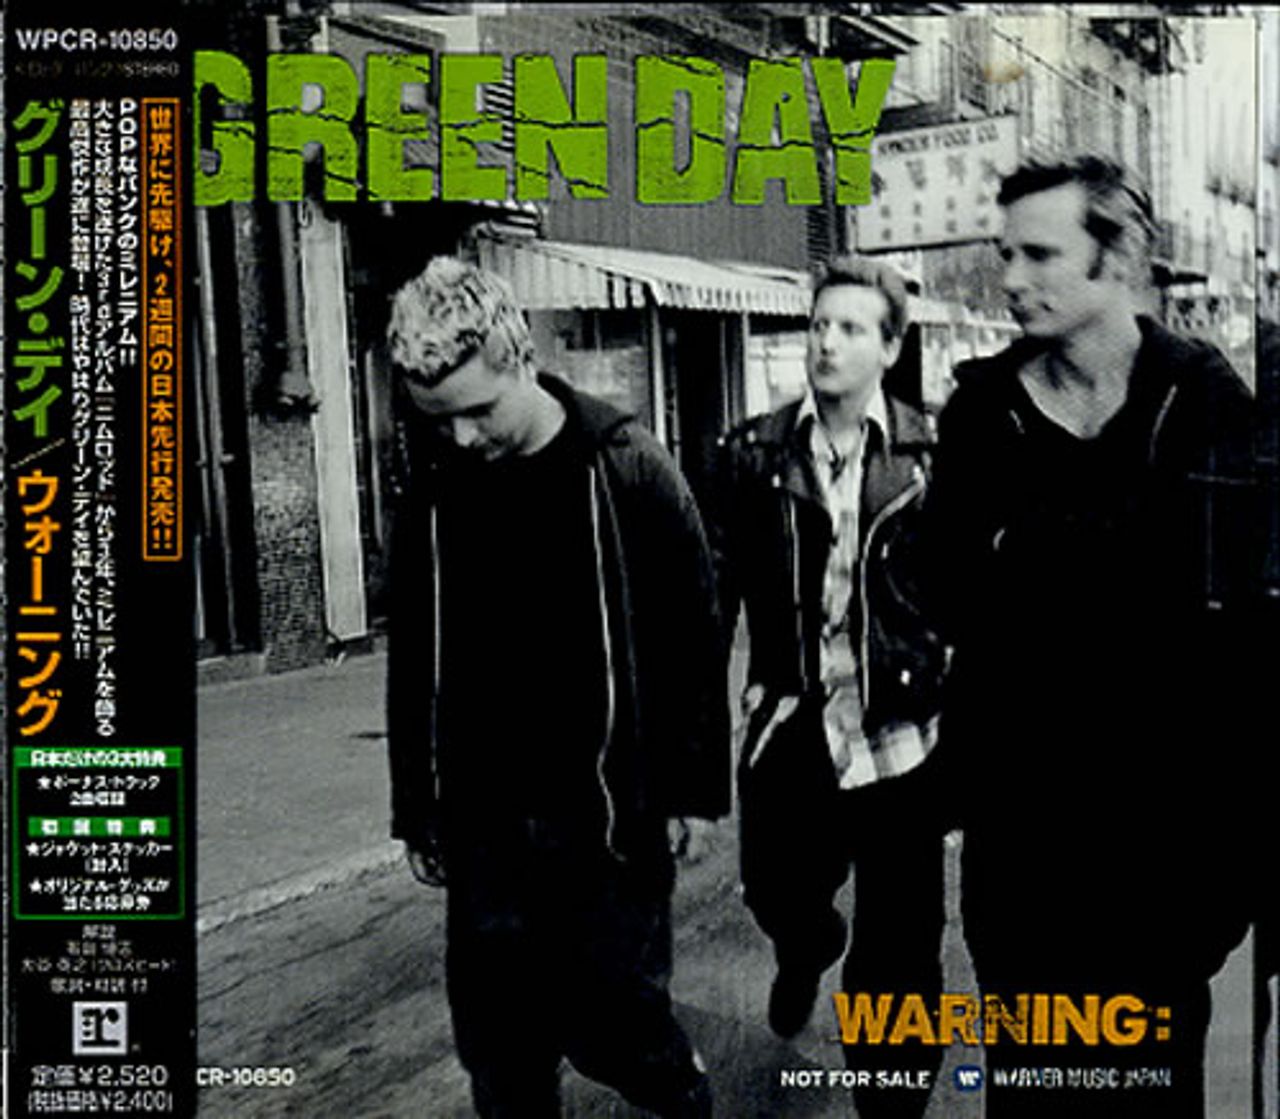 Green Day Warning Japanese Promo CD album — RareVinyl.com